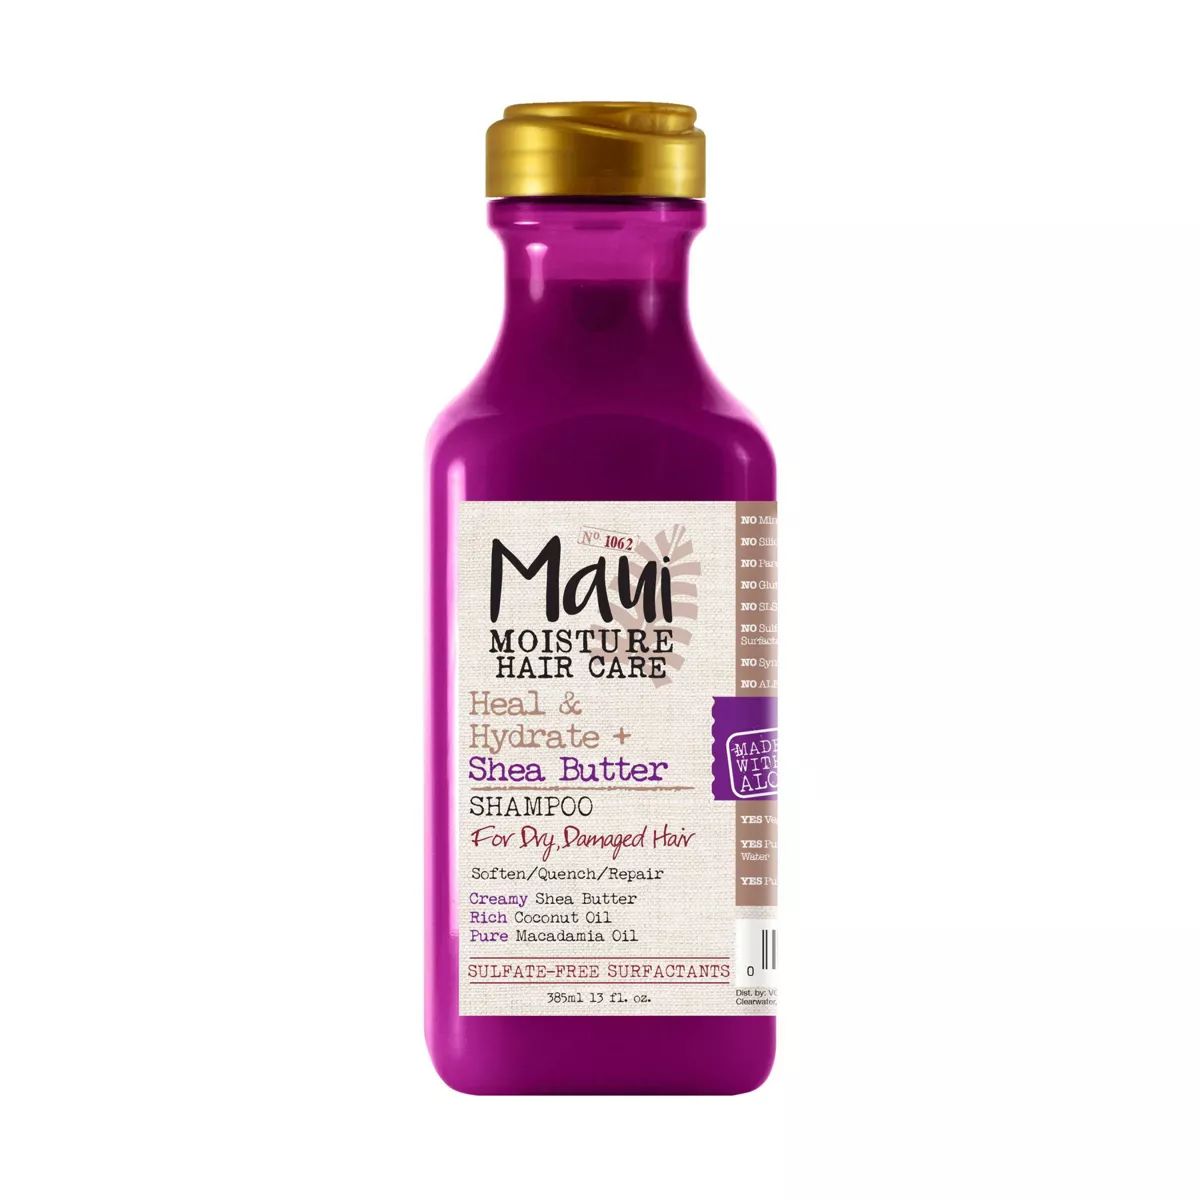 Maui Moisture Heal & Hydrate + Shea Butter Shampoo for Tight Curly Hair - 13 fl oz | Target